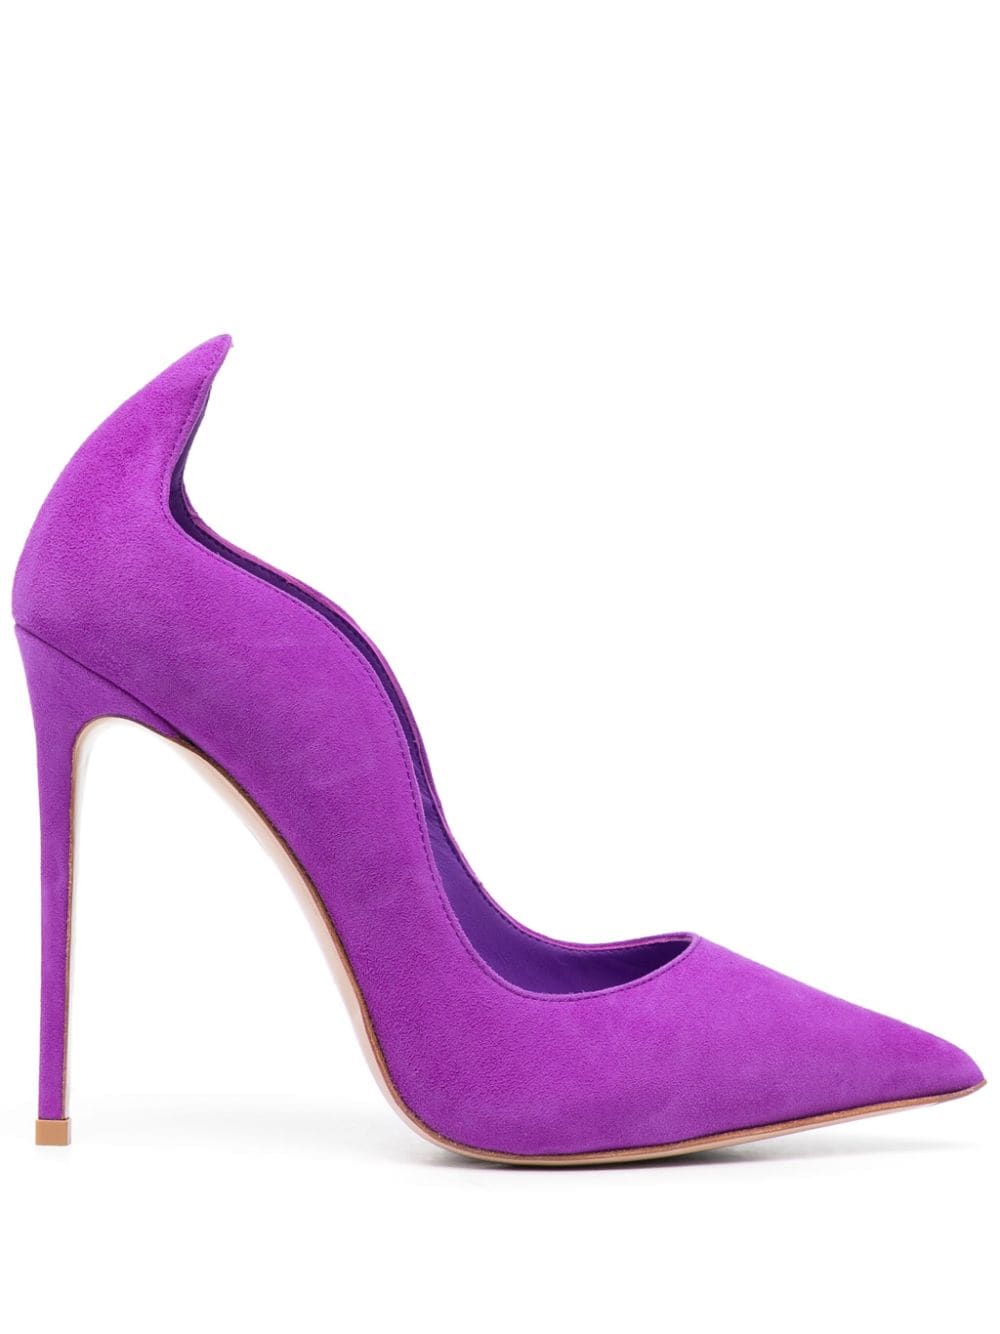 Le Silla Ivy 125mm suede pumps - Purple von Le Silla